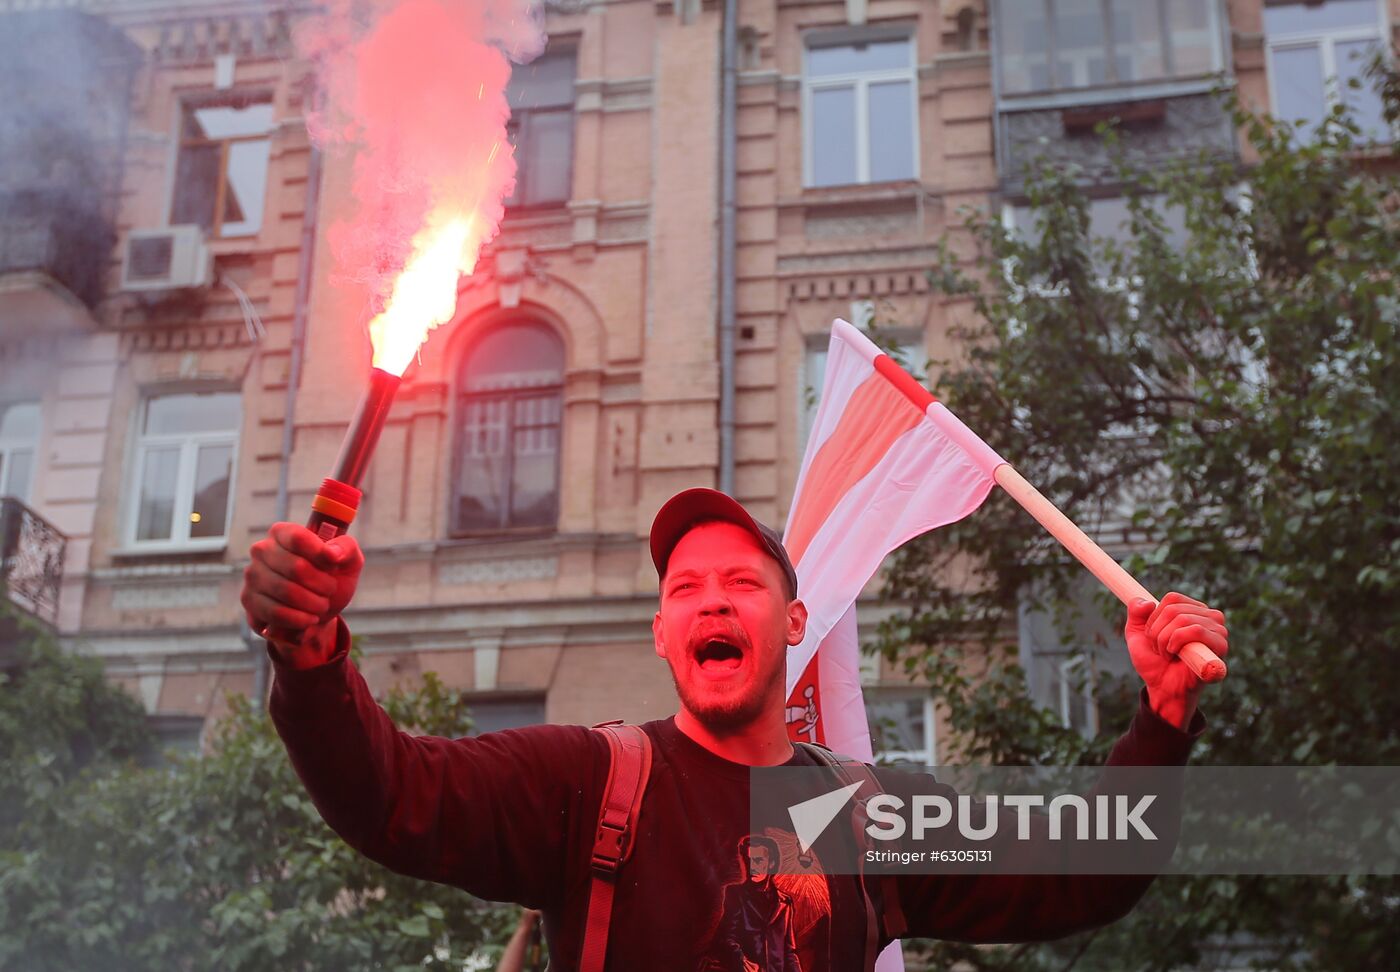 Ukraine Belarus Presidential Election Protest